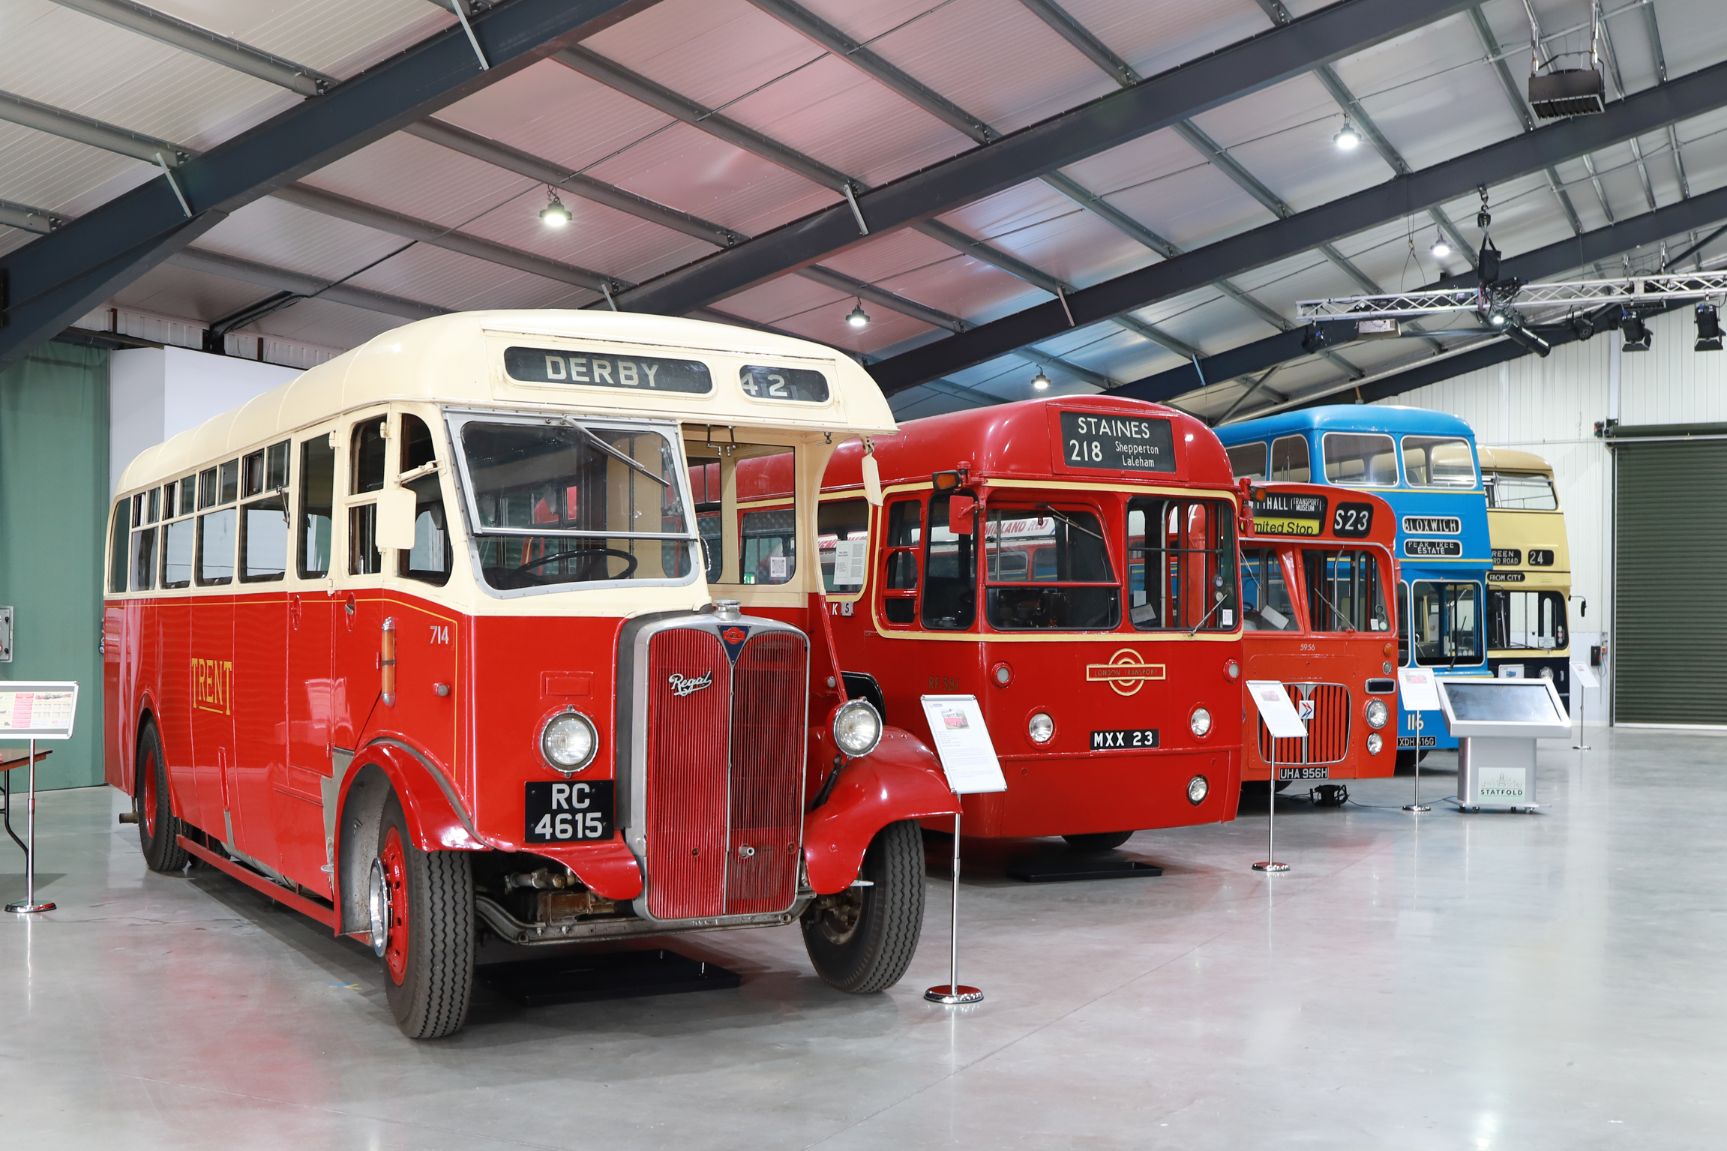 Statfold Transport Museum opens